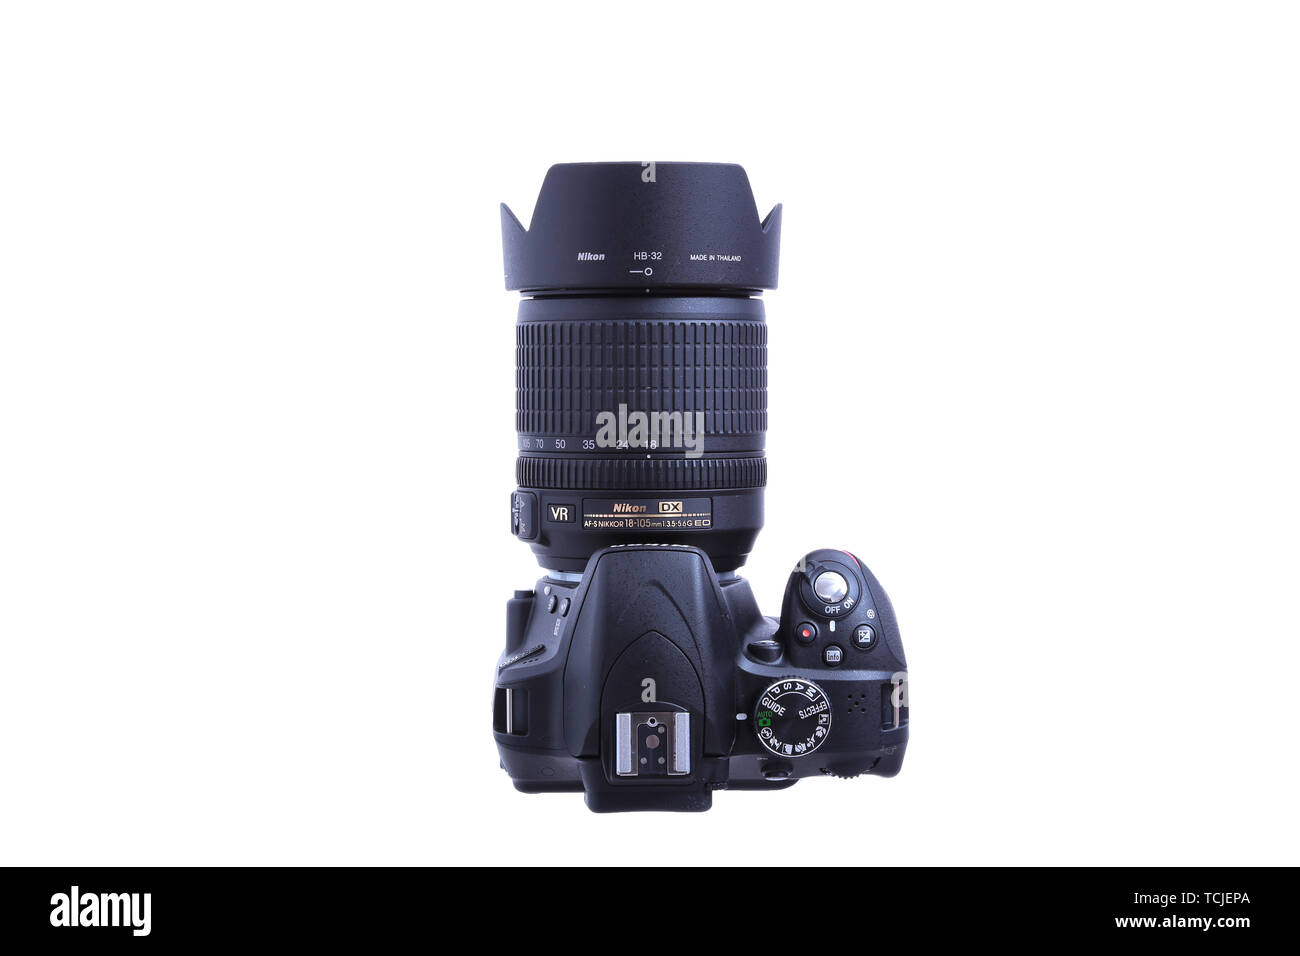 KYIV, UKRAINE - JULE 10, 2015: Nikon d3300 camera with nikkor 18-105mm lens  on white background Stock Photo - Alamy